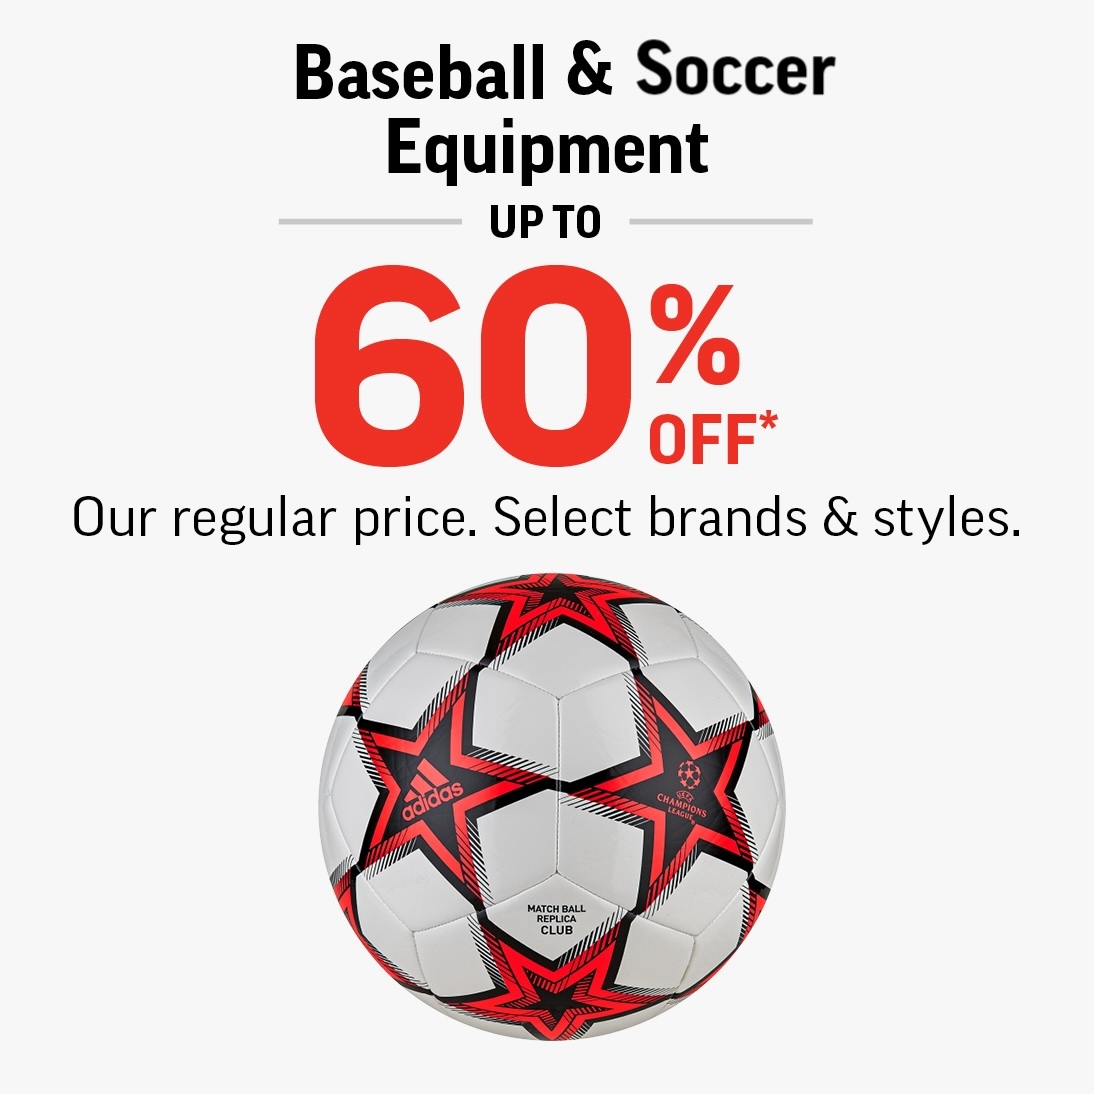 Baseball & Soccer Equipment Up To 60% Off at Sport Chek! Visit stoneroadmall.ca/promotions for details.

#stoneroadmall #guelph #staytrue